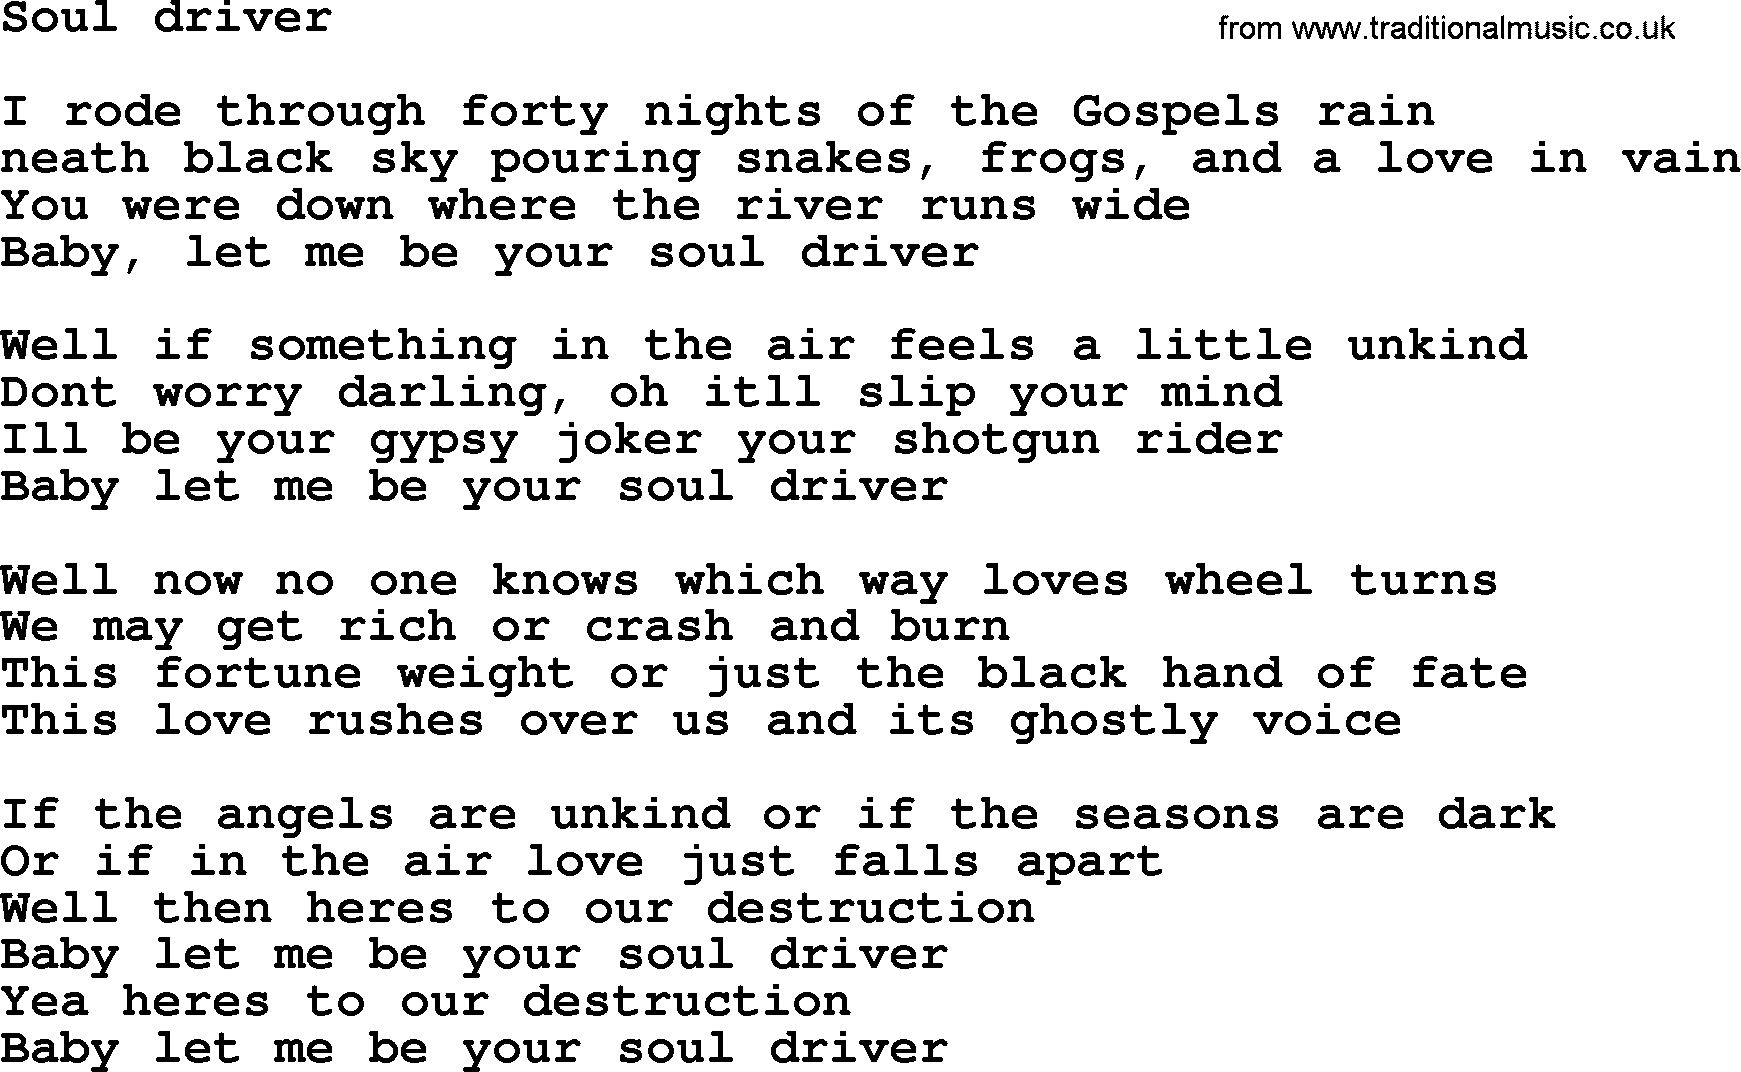 Bruce Springsteen song: Soul Driver lyrics